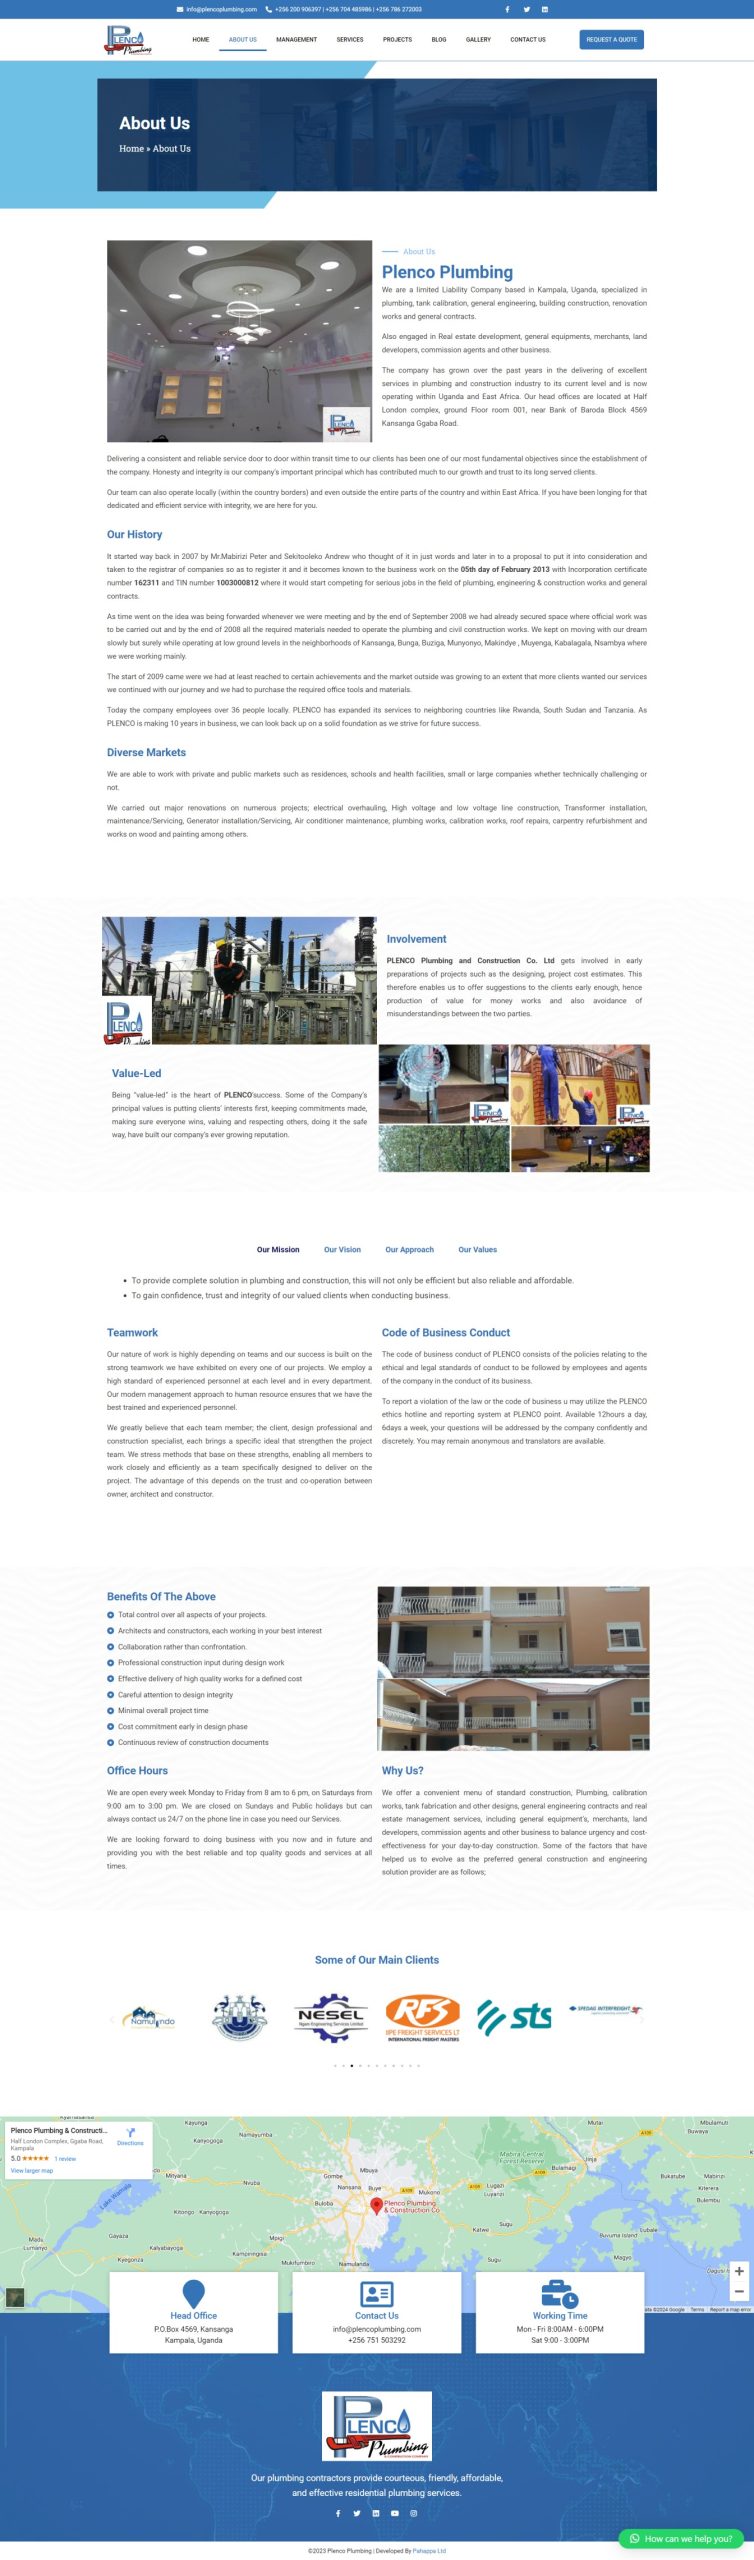 Website-design-Plenco-3